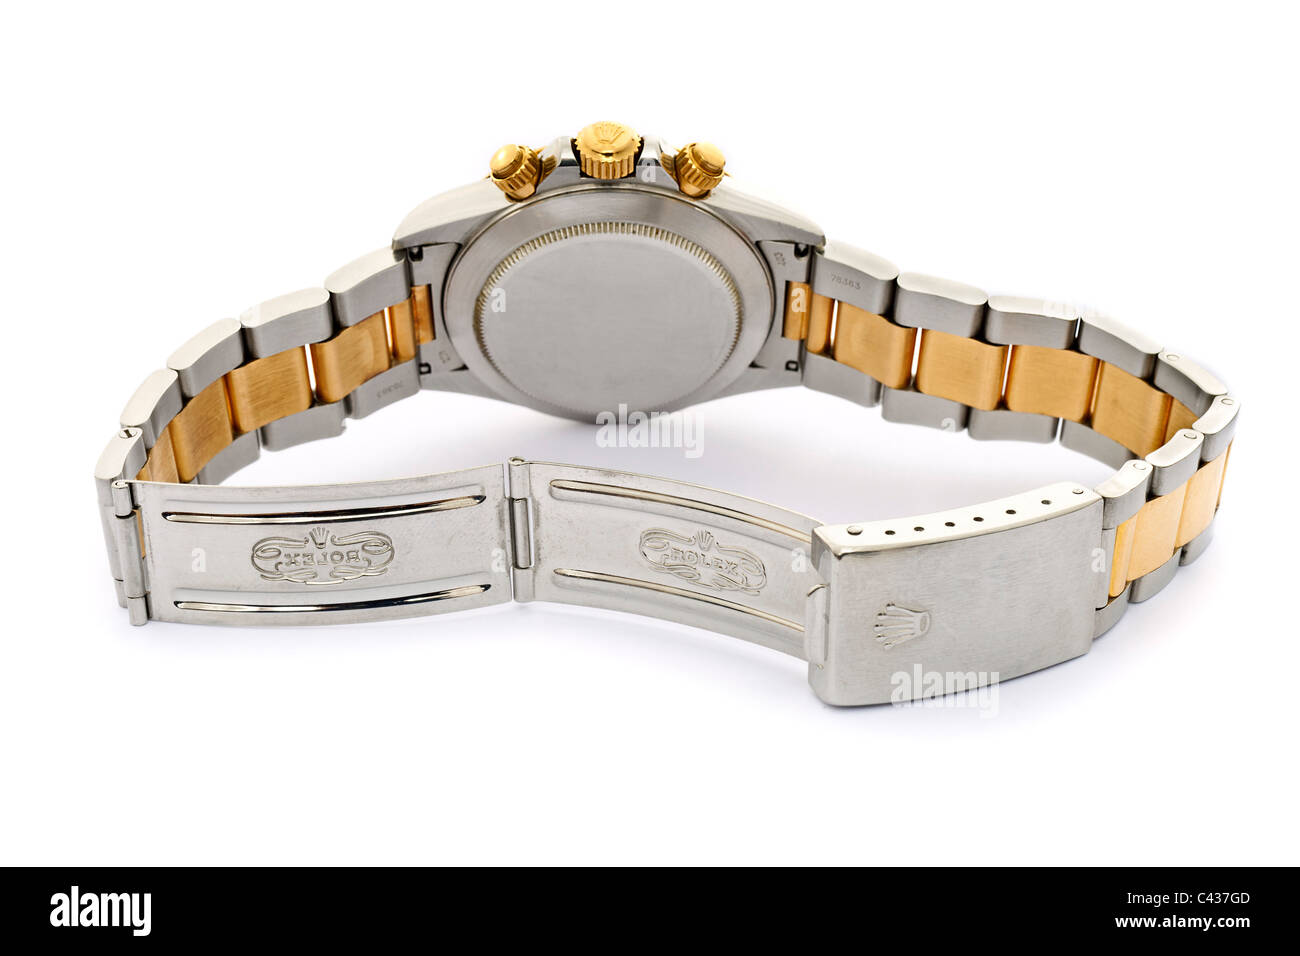 Rolex Daytona Cosmograph Oyster Perpetual Chronometer 18k gold and steel Swiss chronograph wrist watch JMH4902 Stock Photo